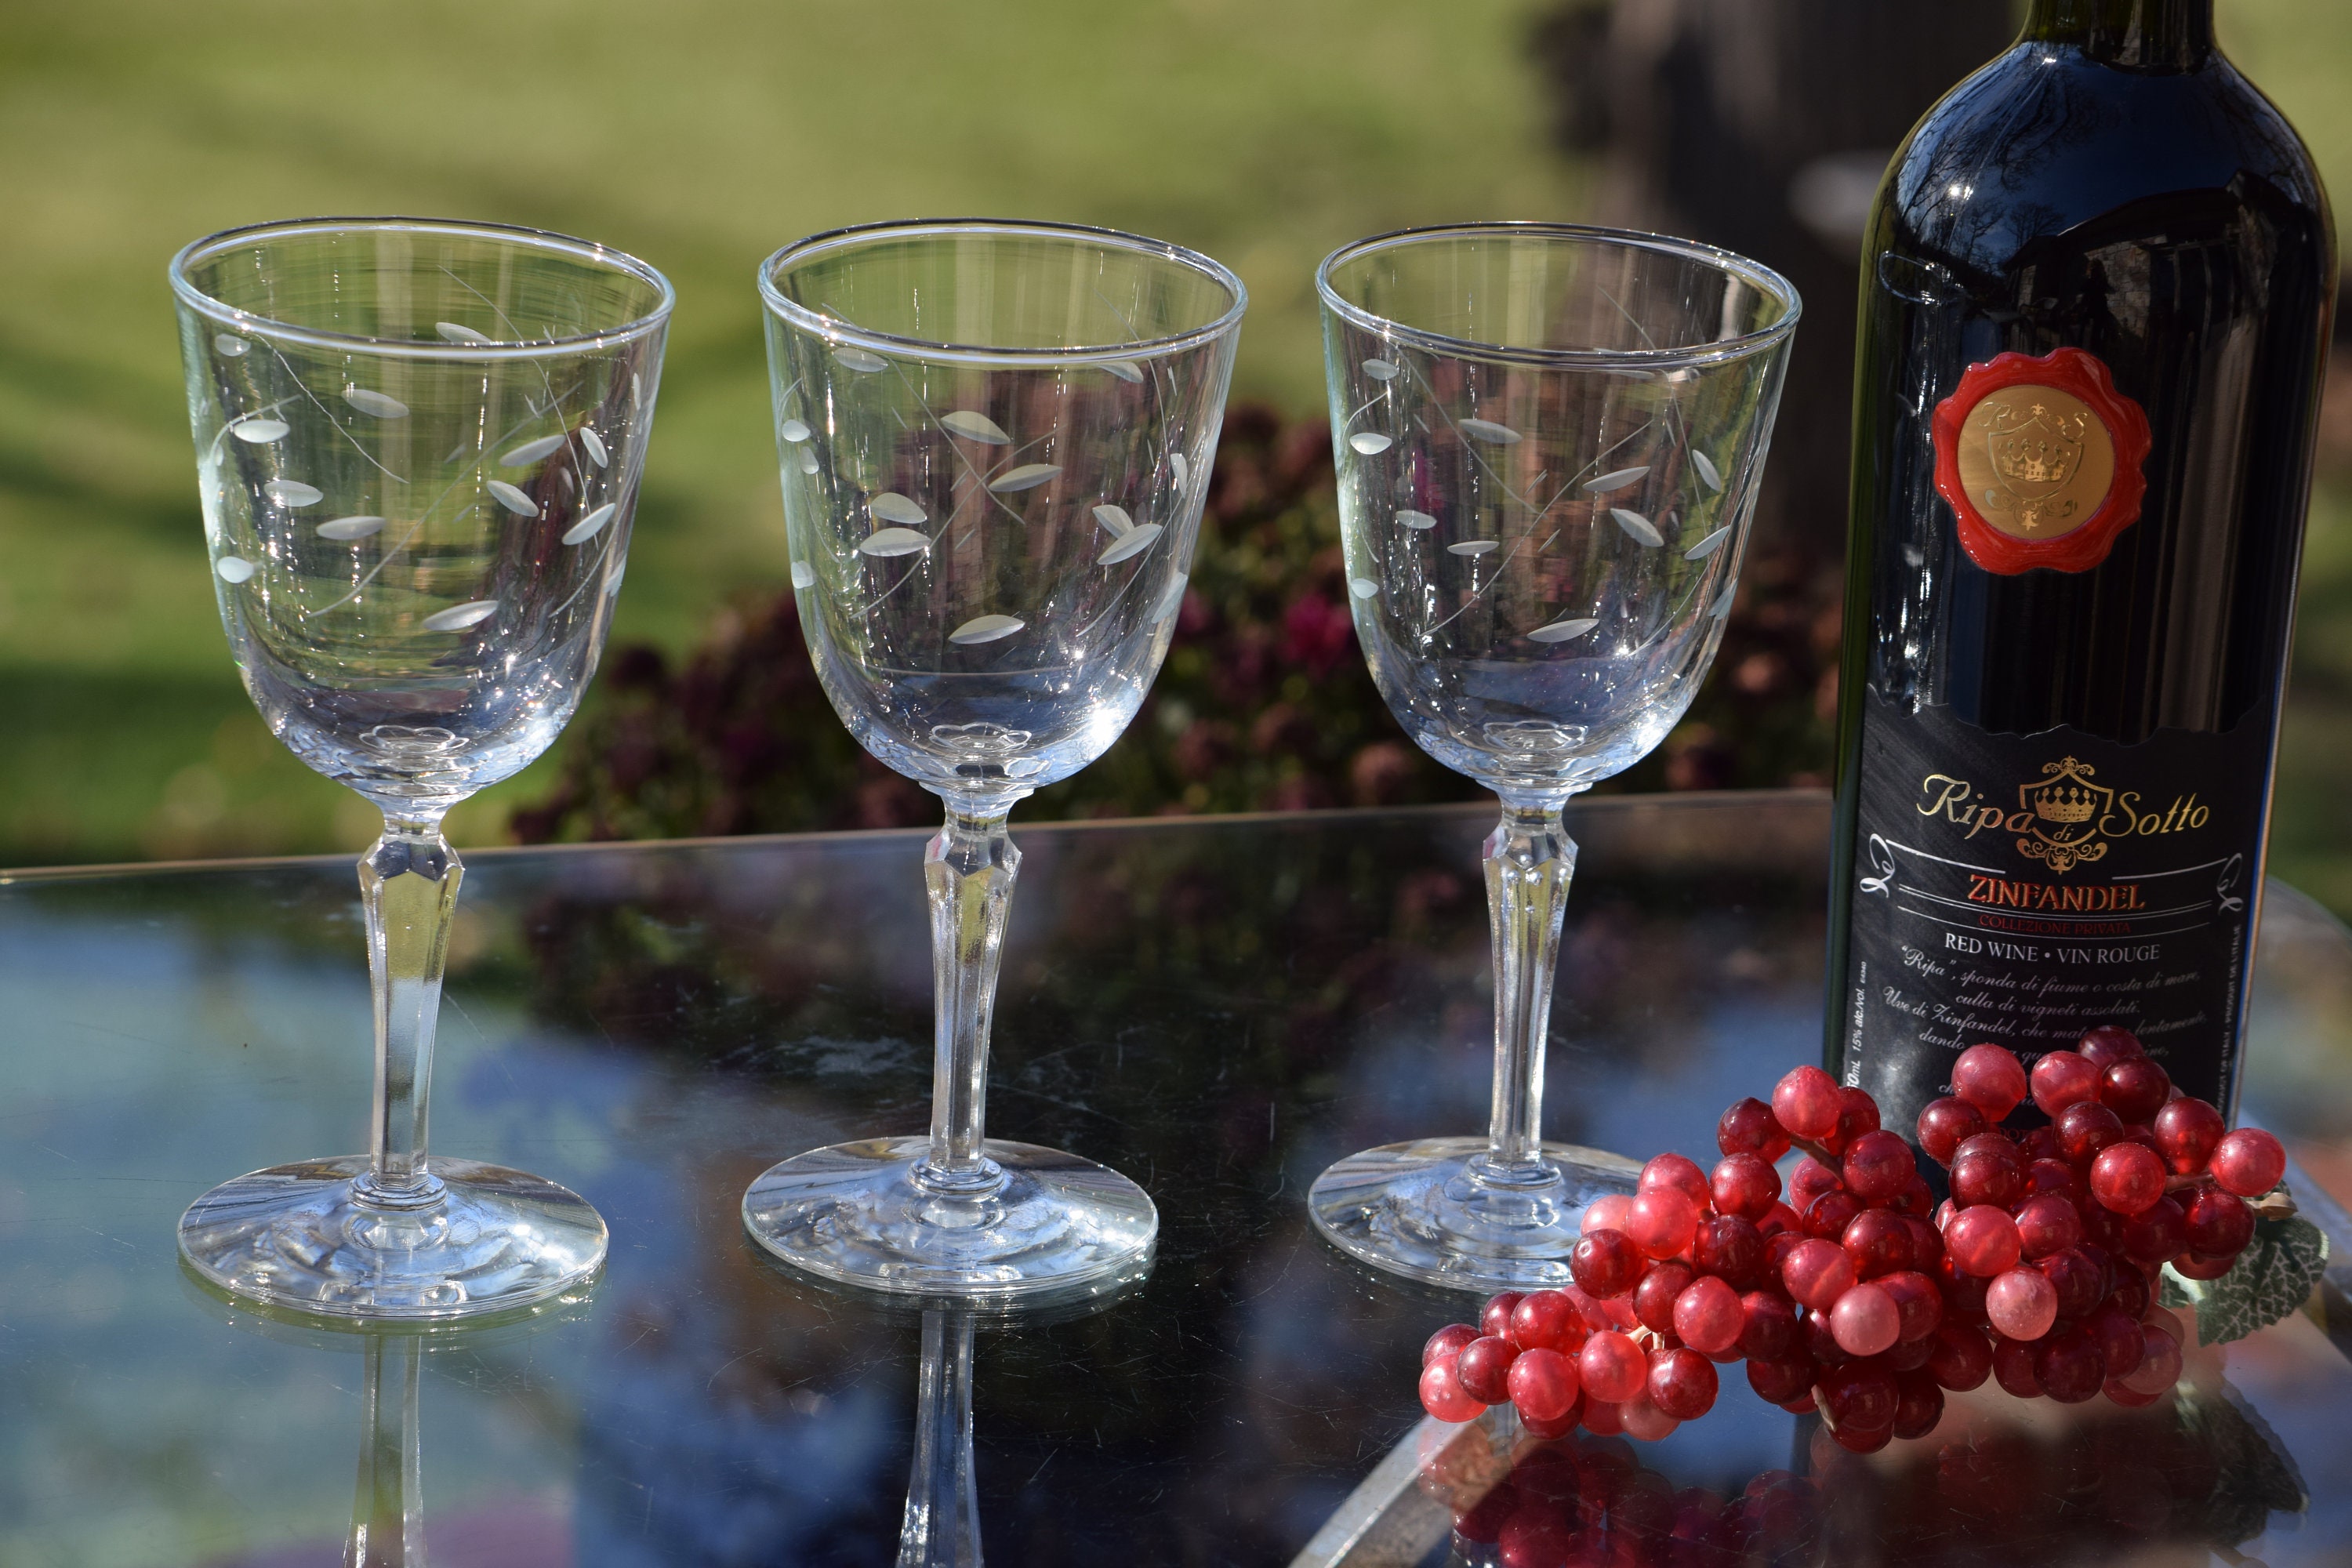 Exquisite sea Glass Vintage Wine Glasses Set of 8 